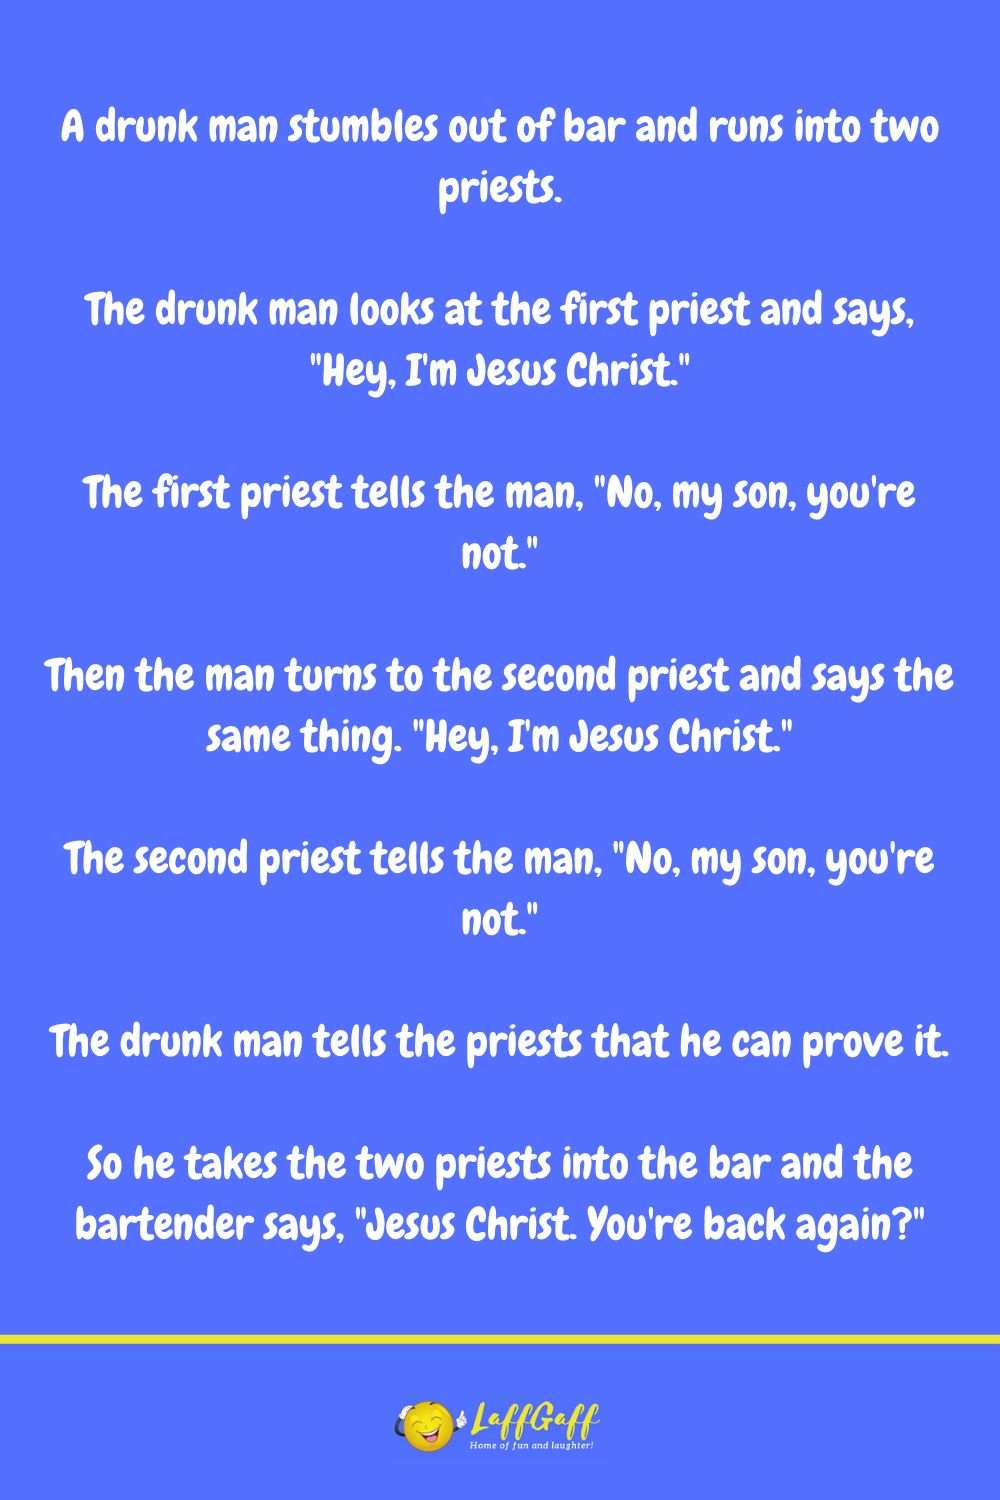 Two priests joke from LaffGaff.